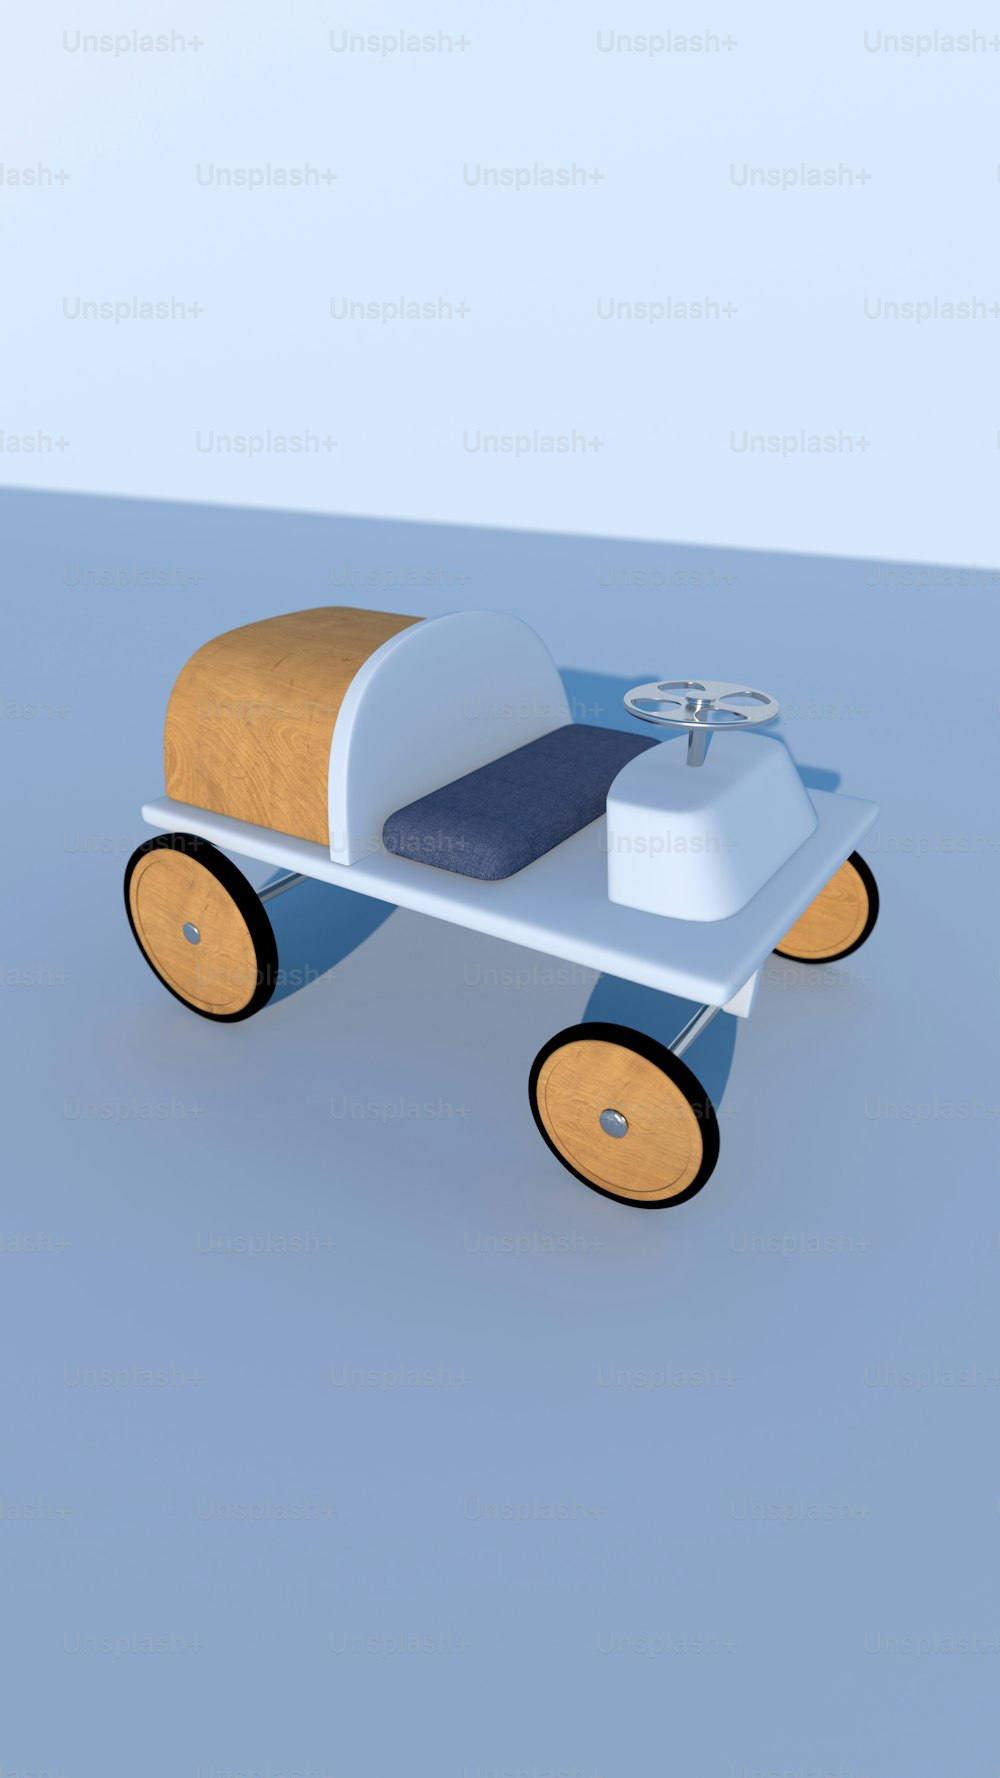 Un coche de juguete de madera con un asiento azul